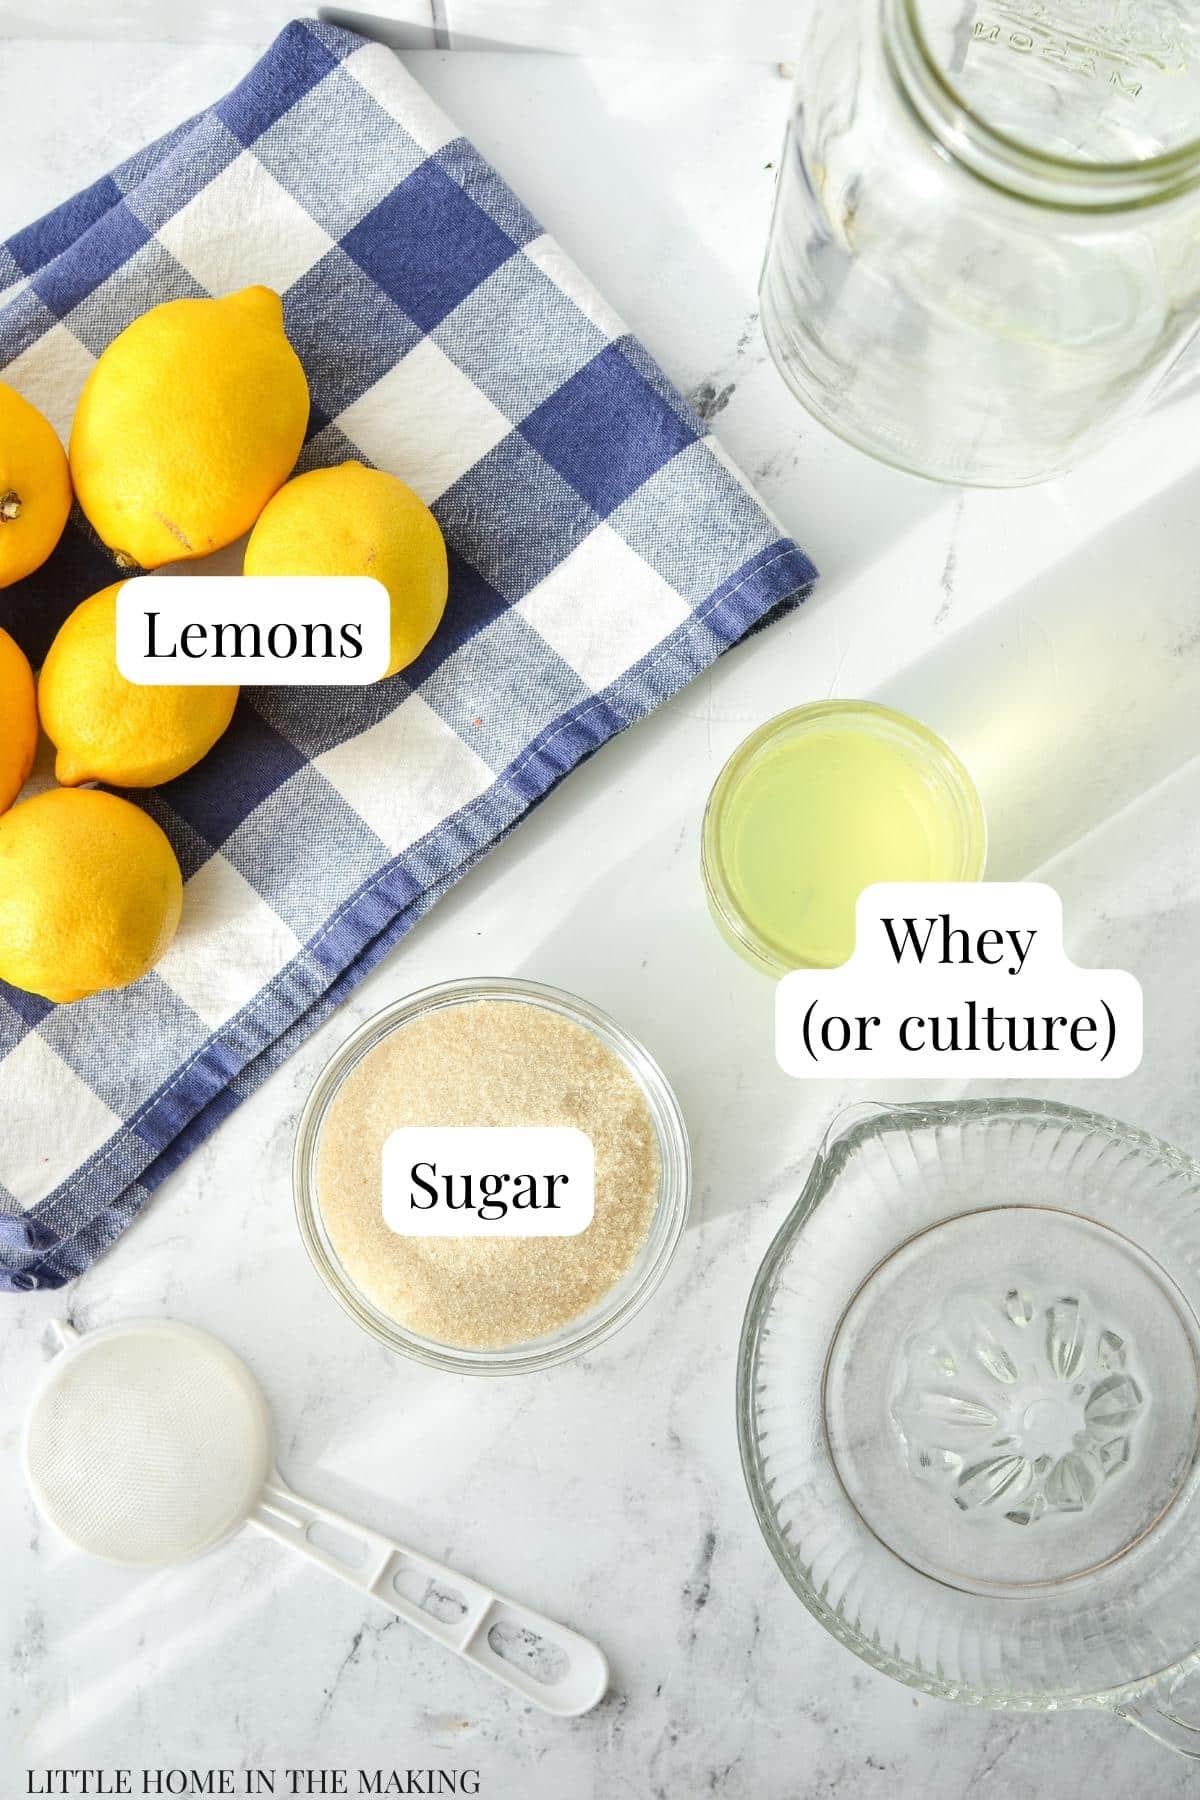 The ingredients needed to make whey lemonade: whey, lemons, sugar, and water.